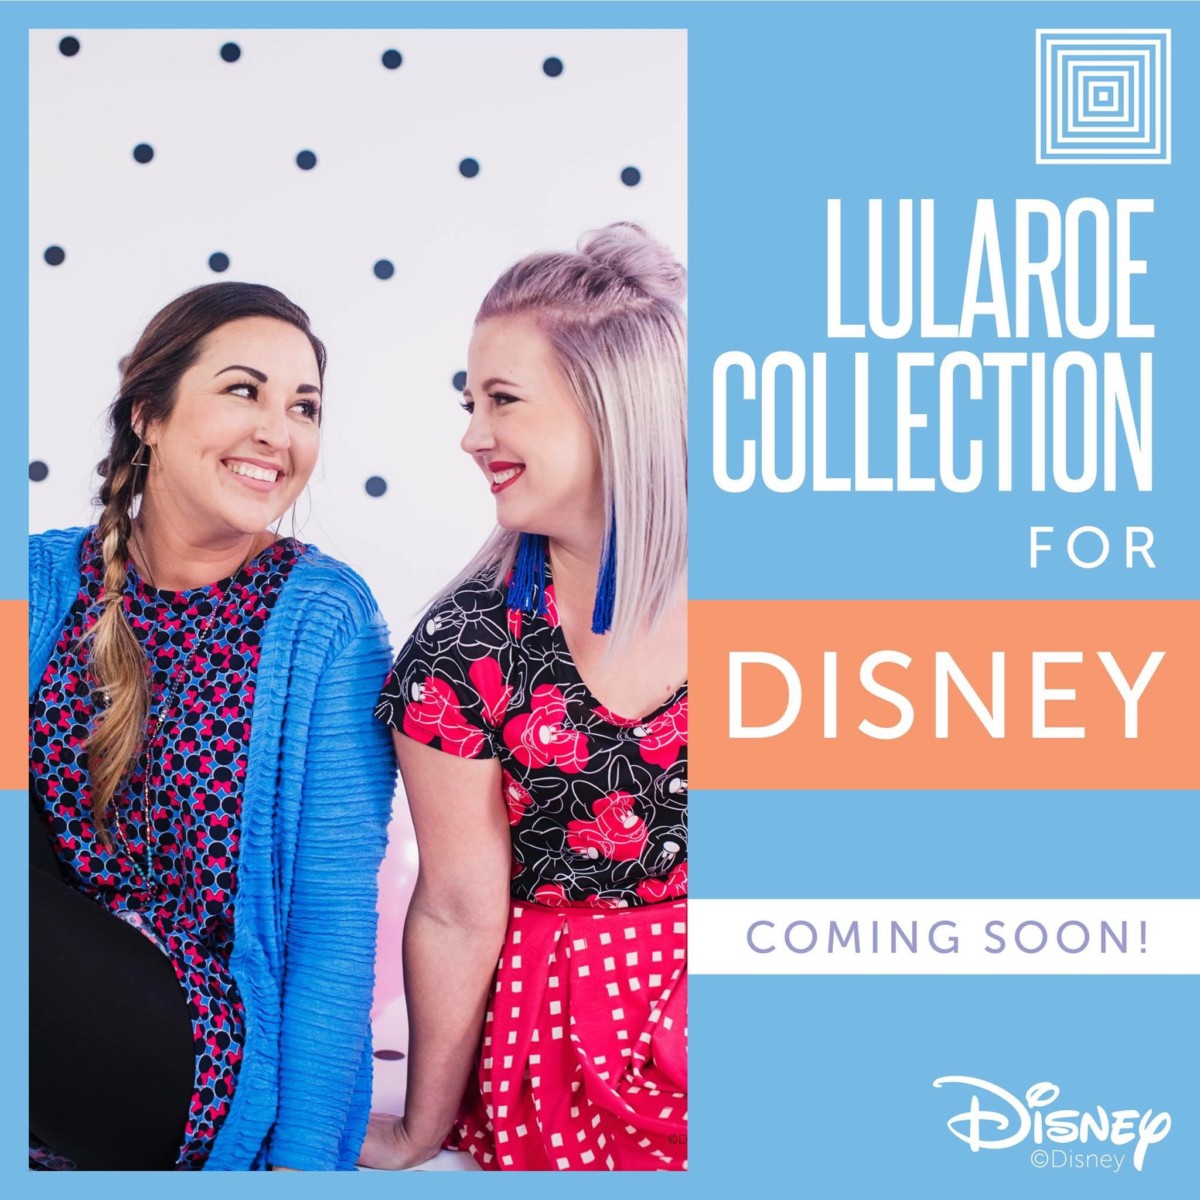 Disney Themed LuLaRoe Clothing Now Available